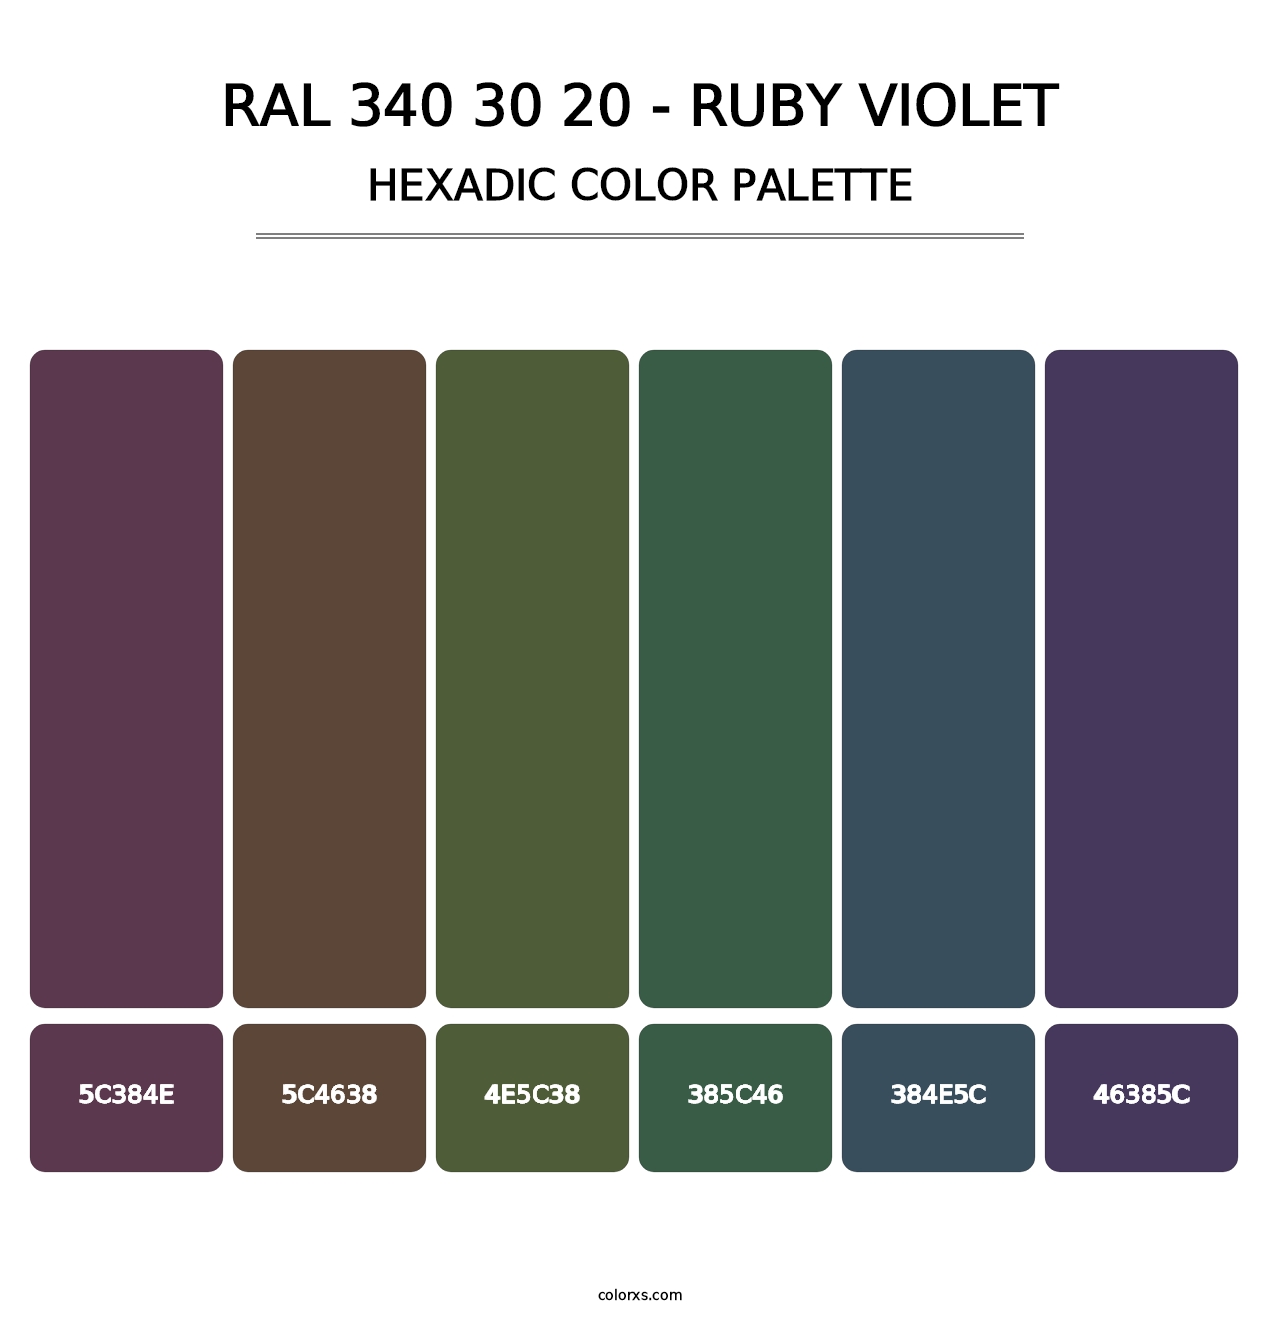 RAL 340 30 20 - Ruby Violet - Hexadic Color Palette